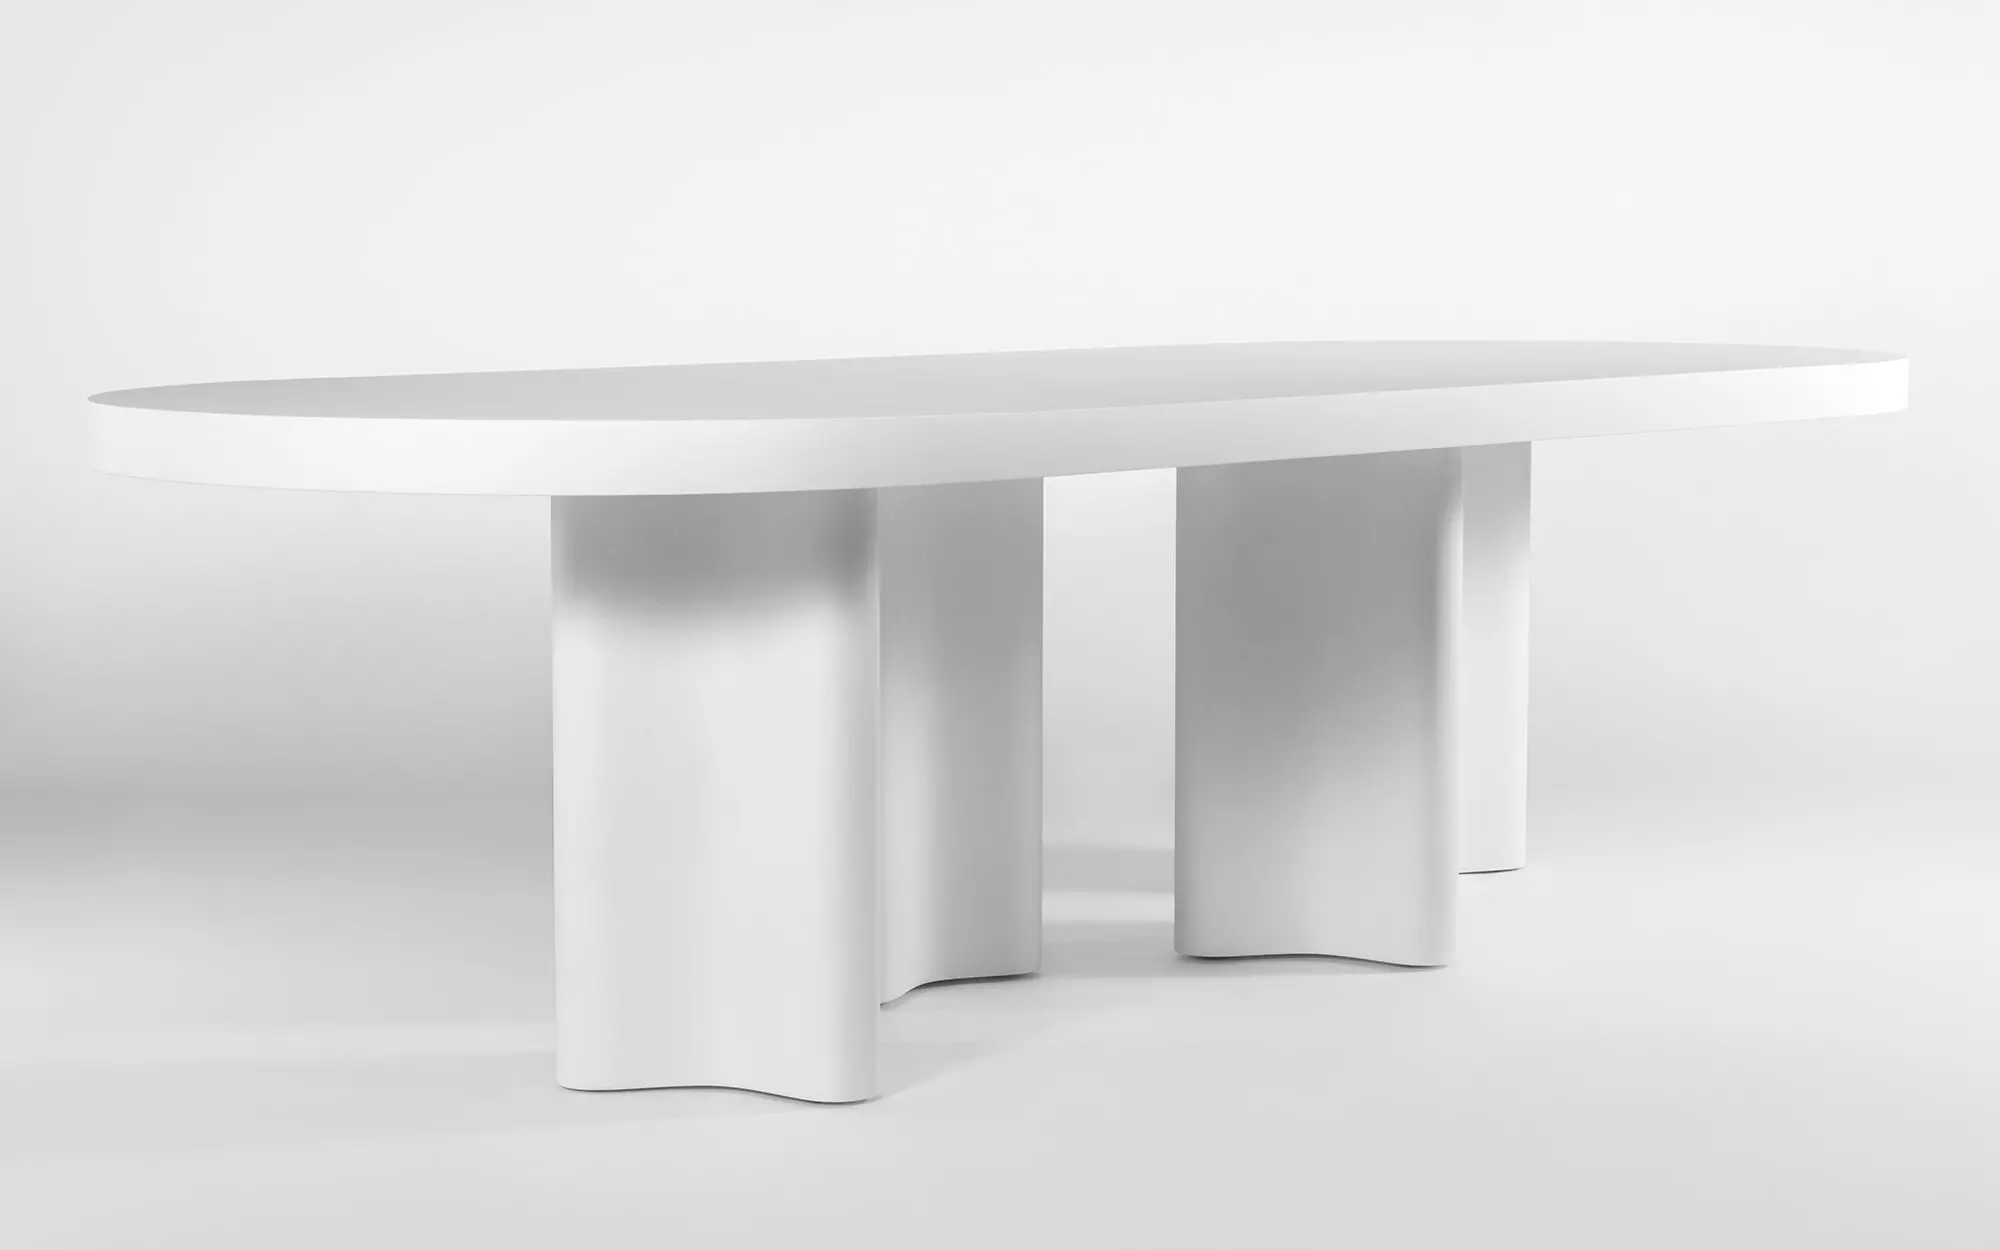 Azo oval table - François Bauchet - Storage - Galerie kreo